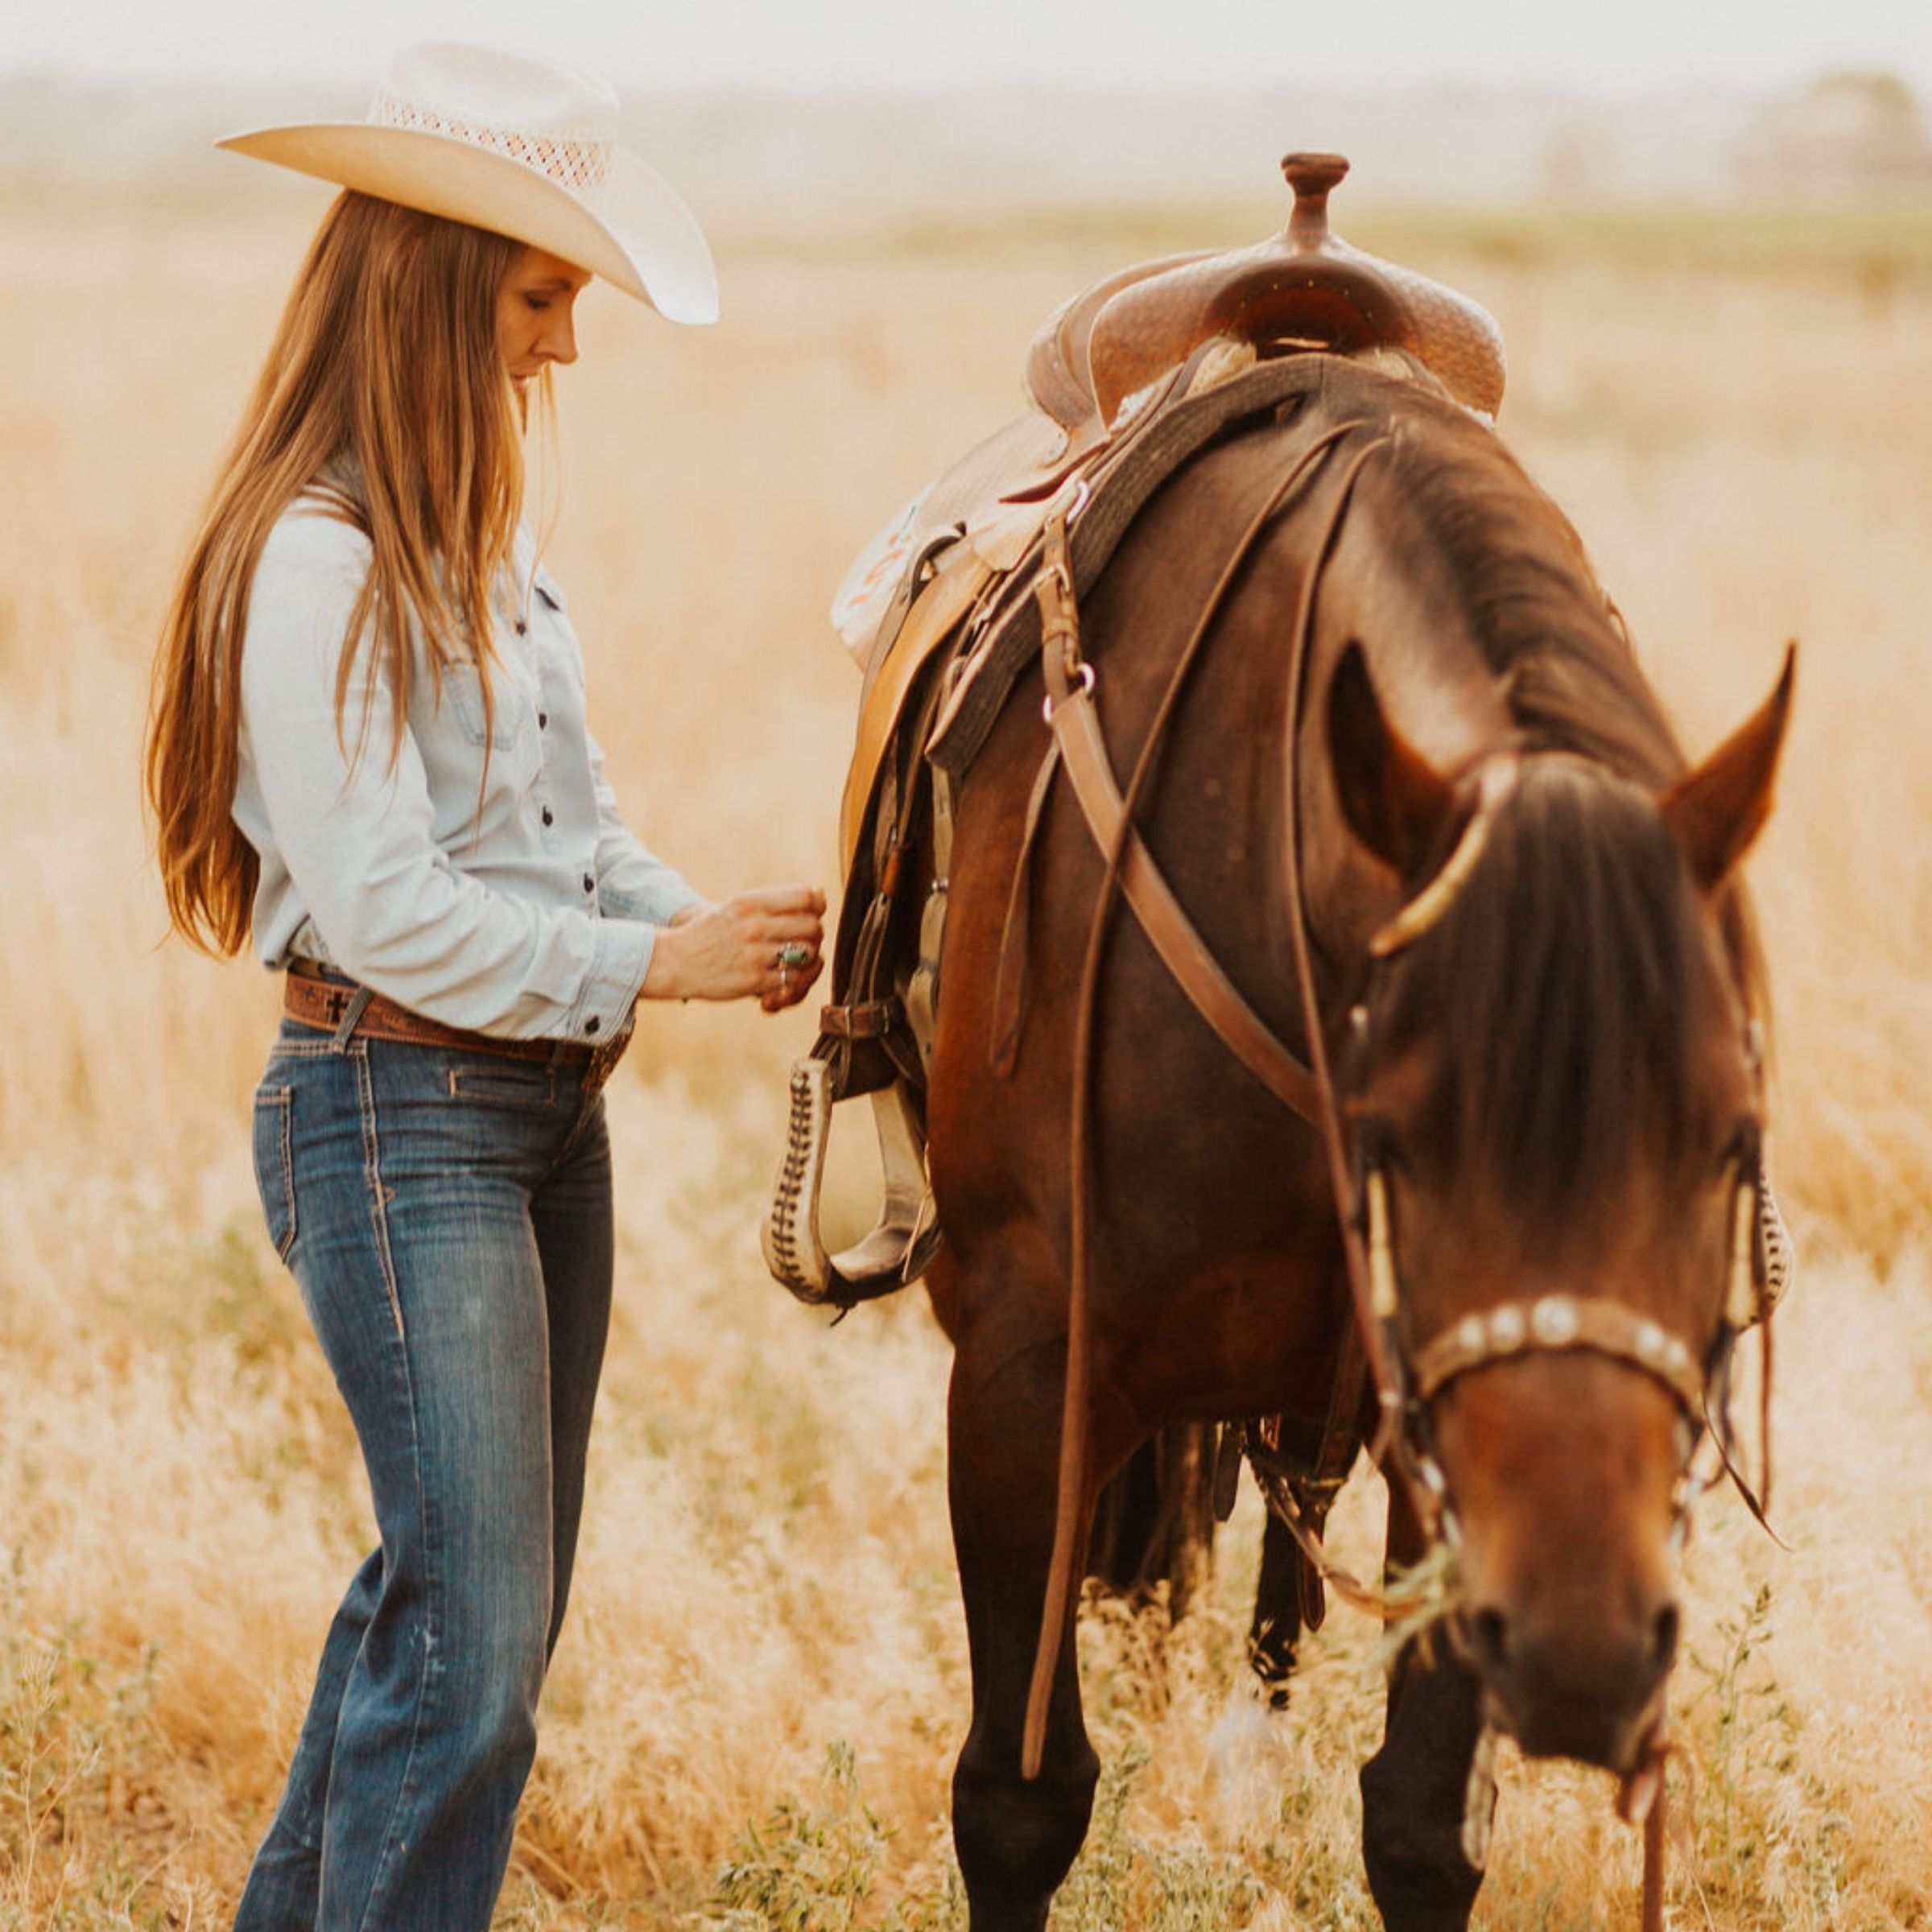 Tall woman saddling horse in field Faith-Hanan-Spiritual-Growth-for-Women